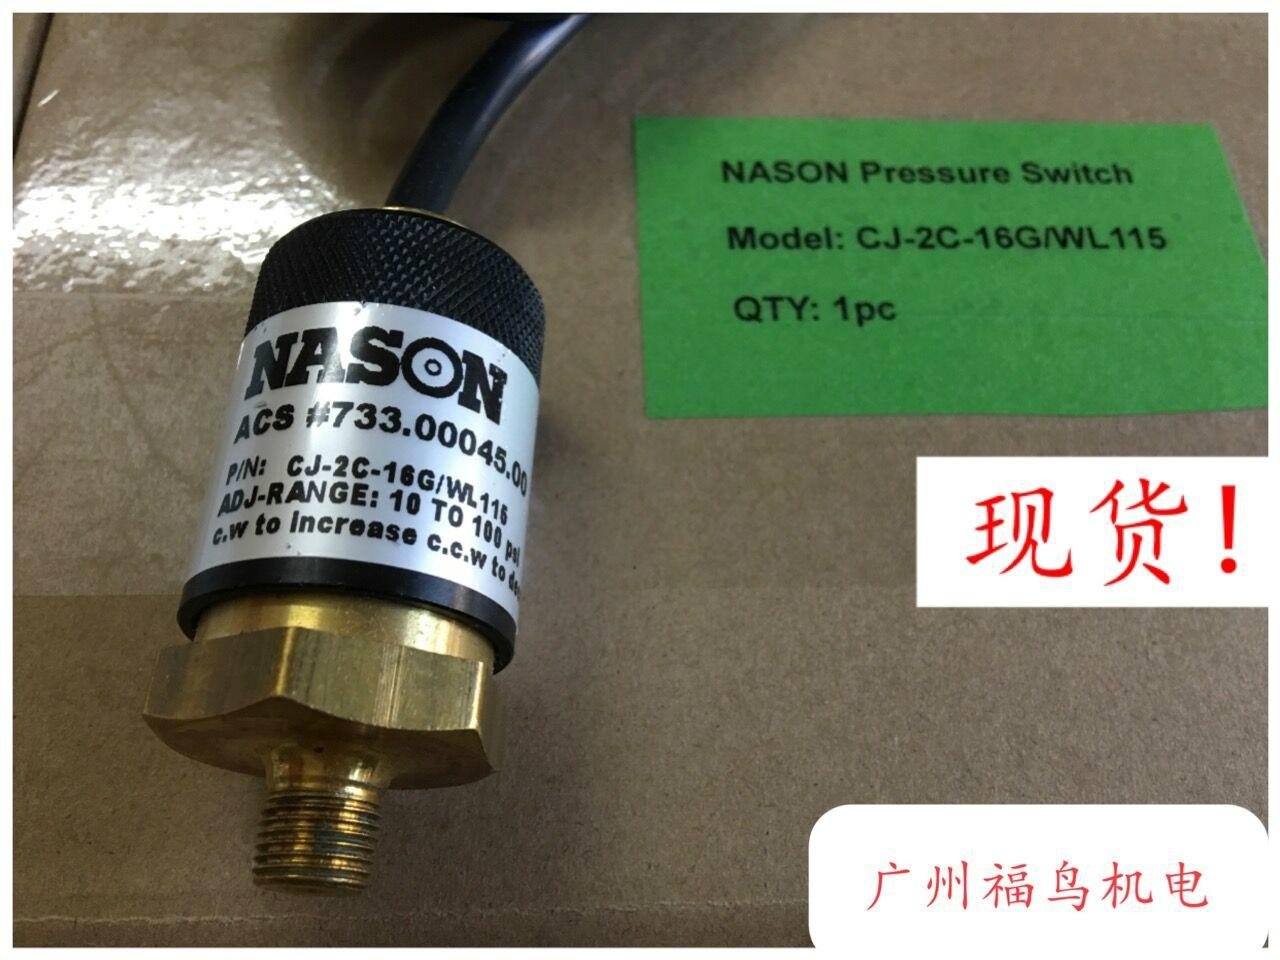 NASON压力开关, 型号: CJ-2C-16G/WL115